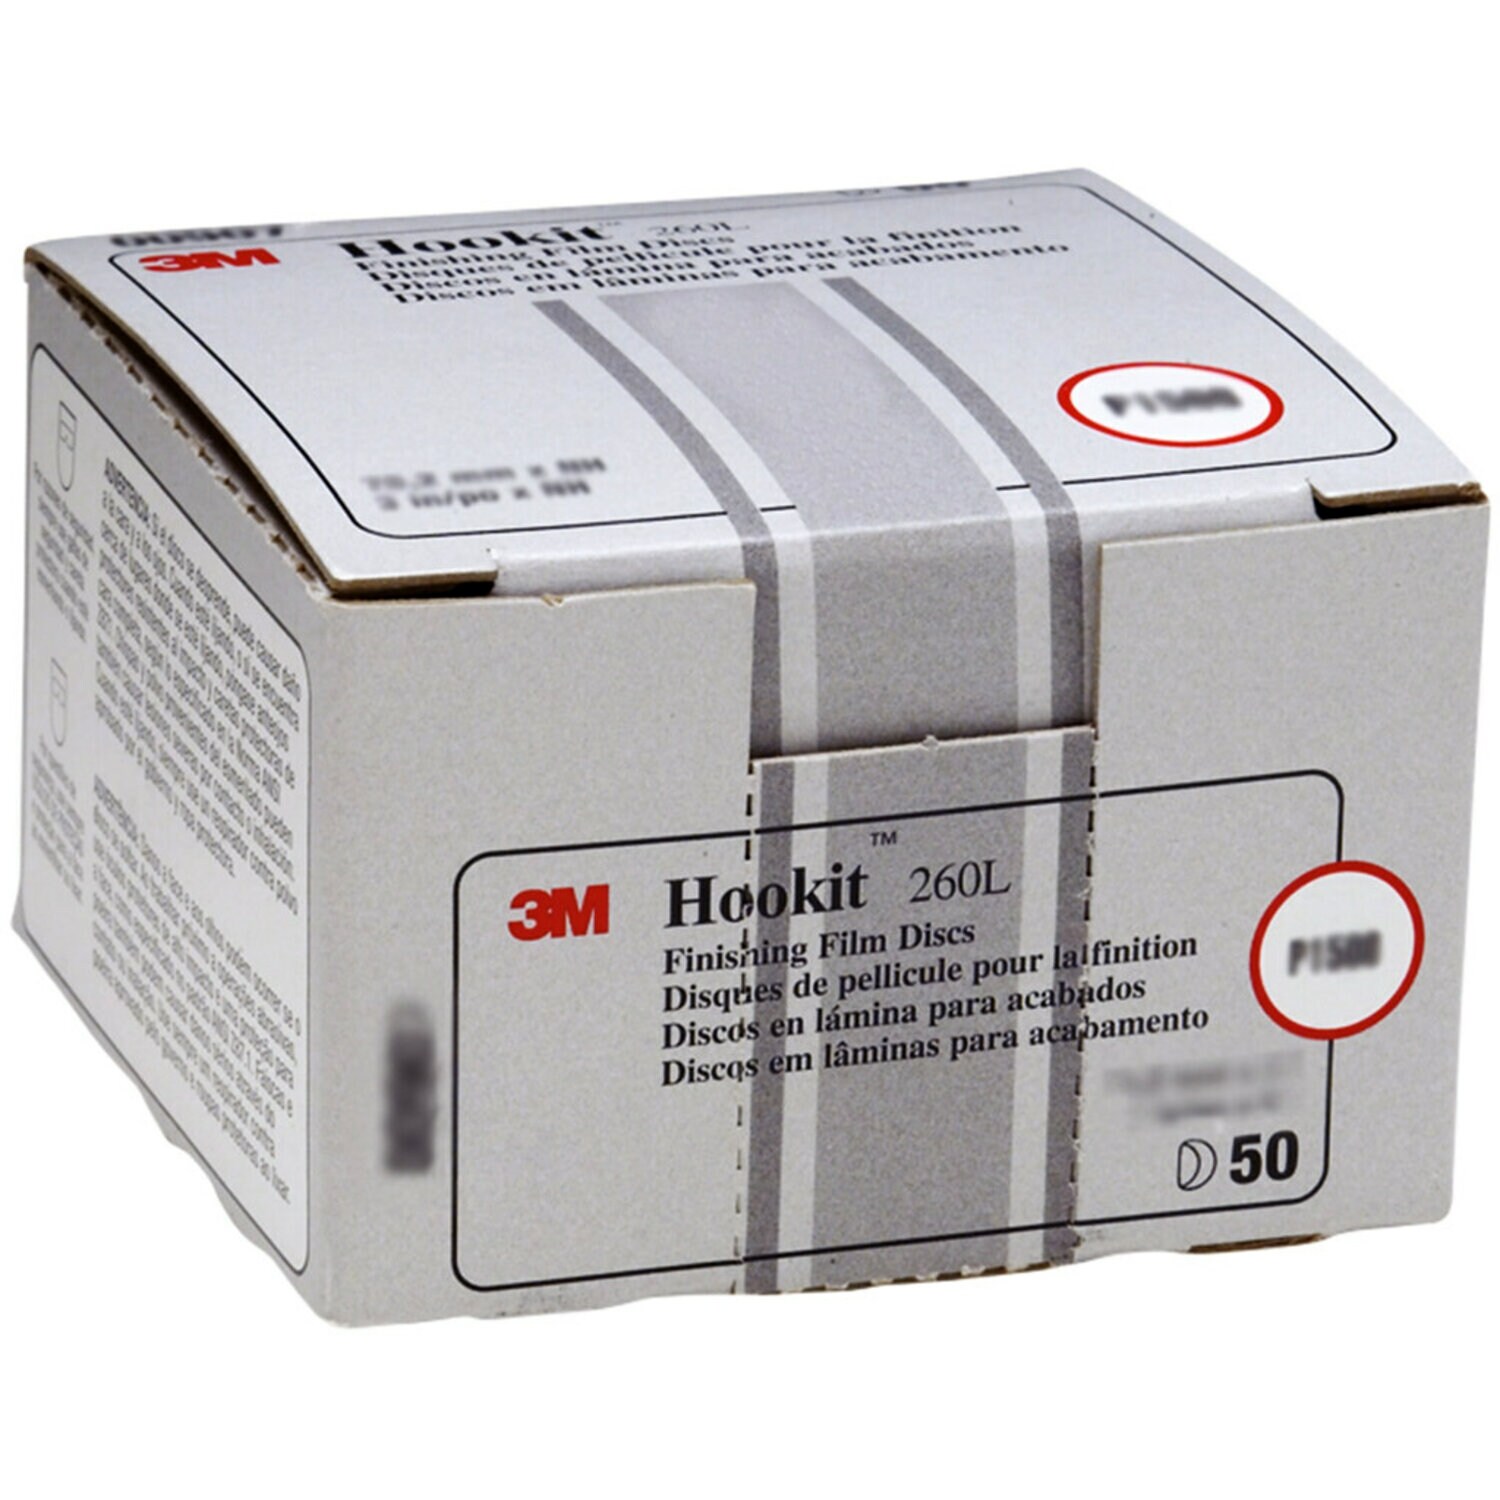 7000120387 - 3M Hookit Finishing Film Abrasive Disc 260L, 00911, 3 in, P600, 50
discs per carton, 4 cartons per case